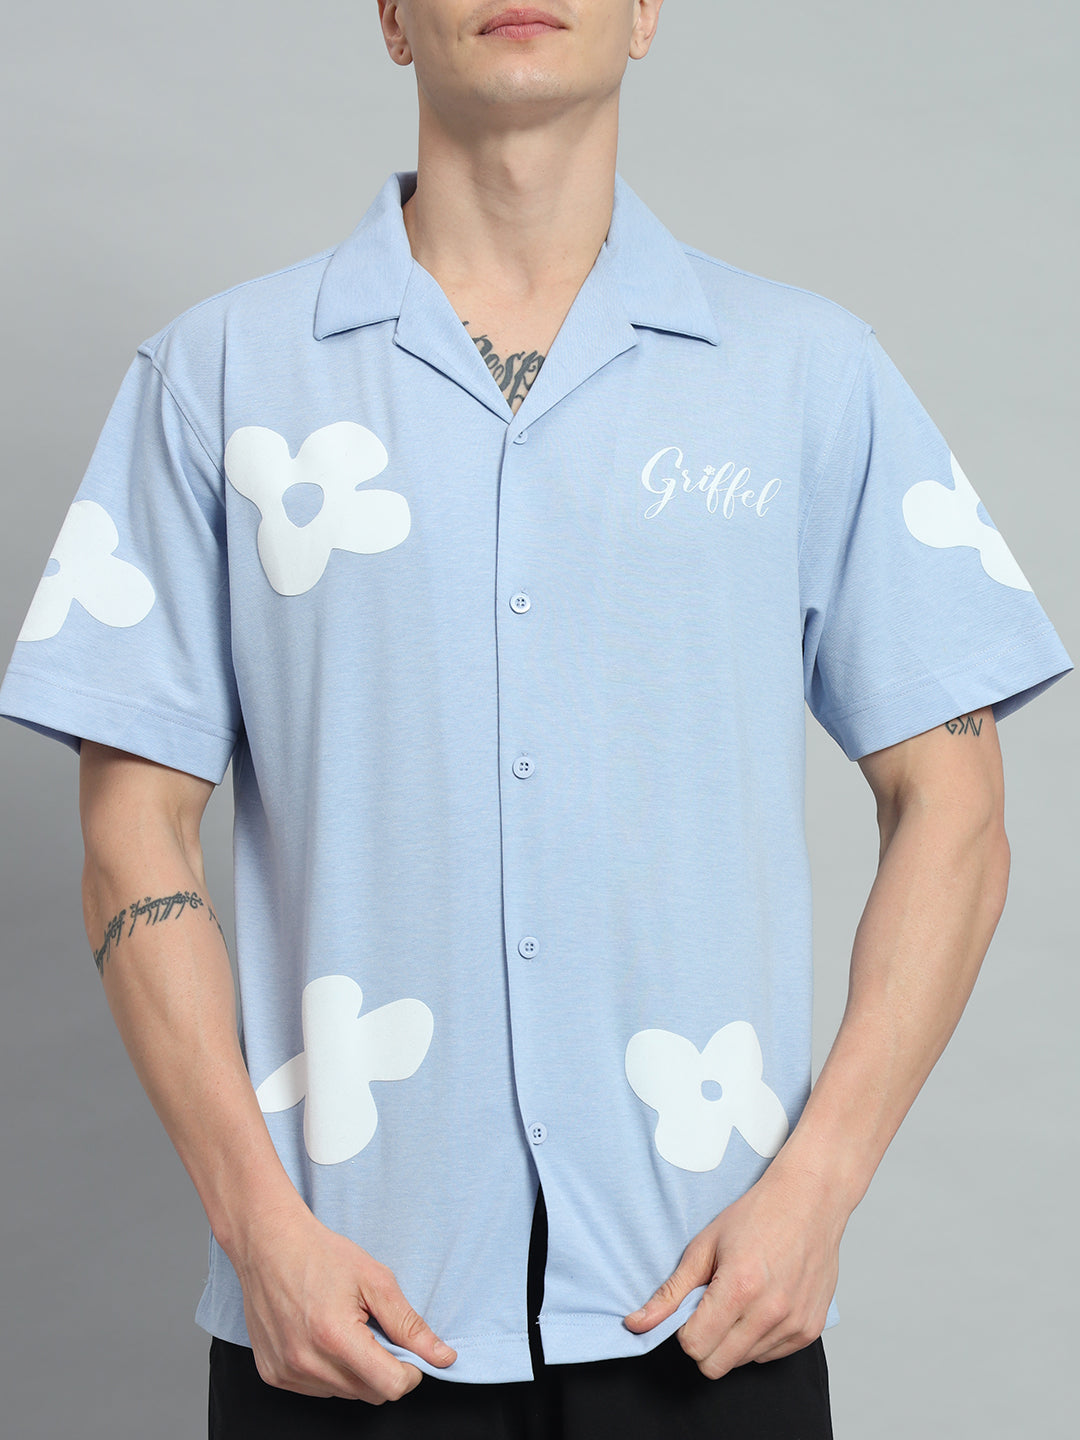 GRIFFEL Printed Bowling Shirt and Shorts Set